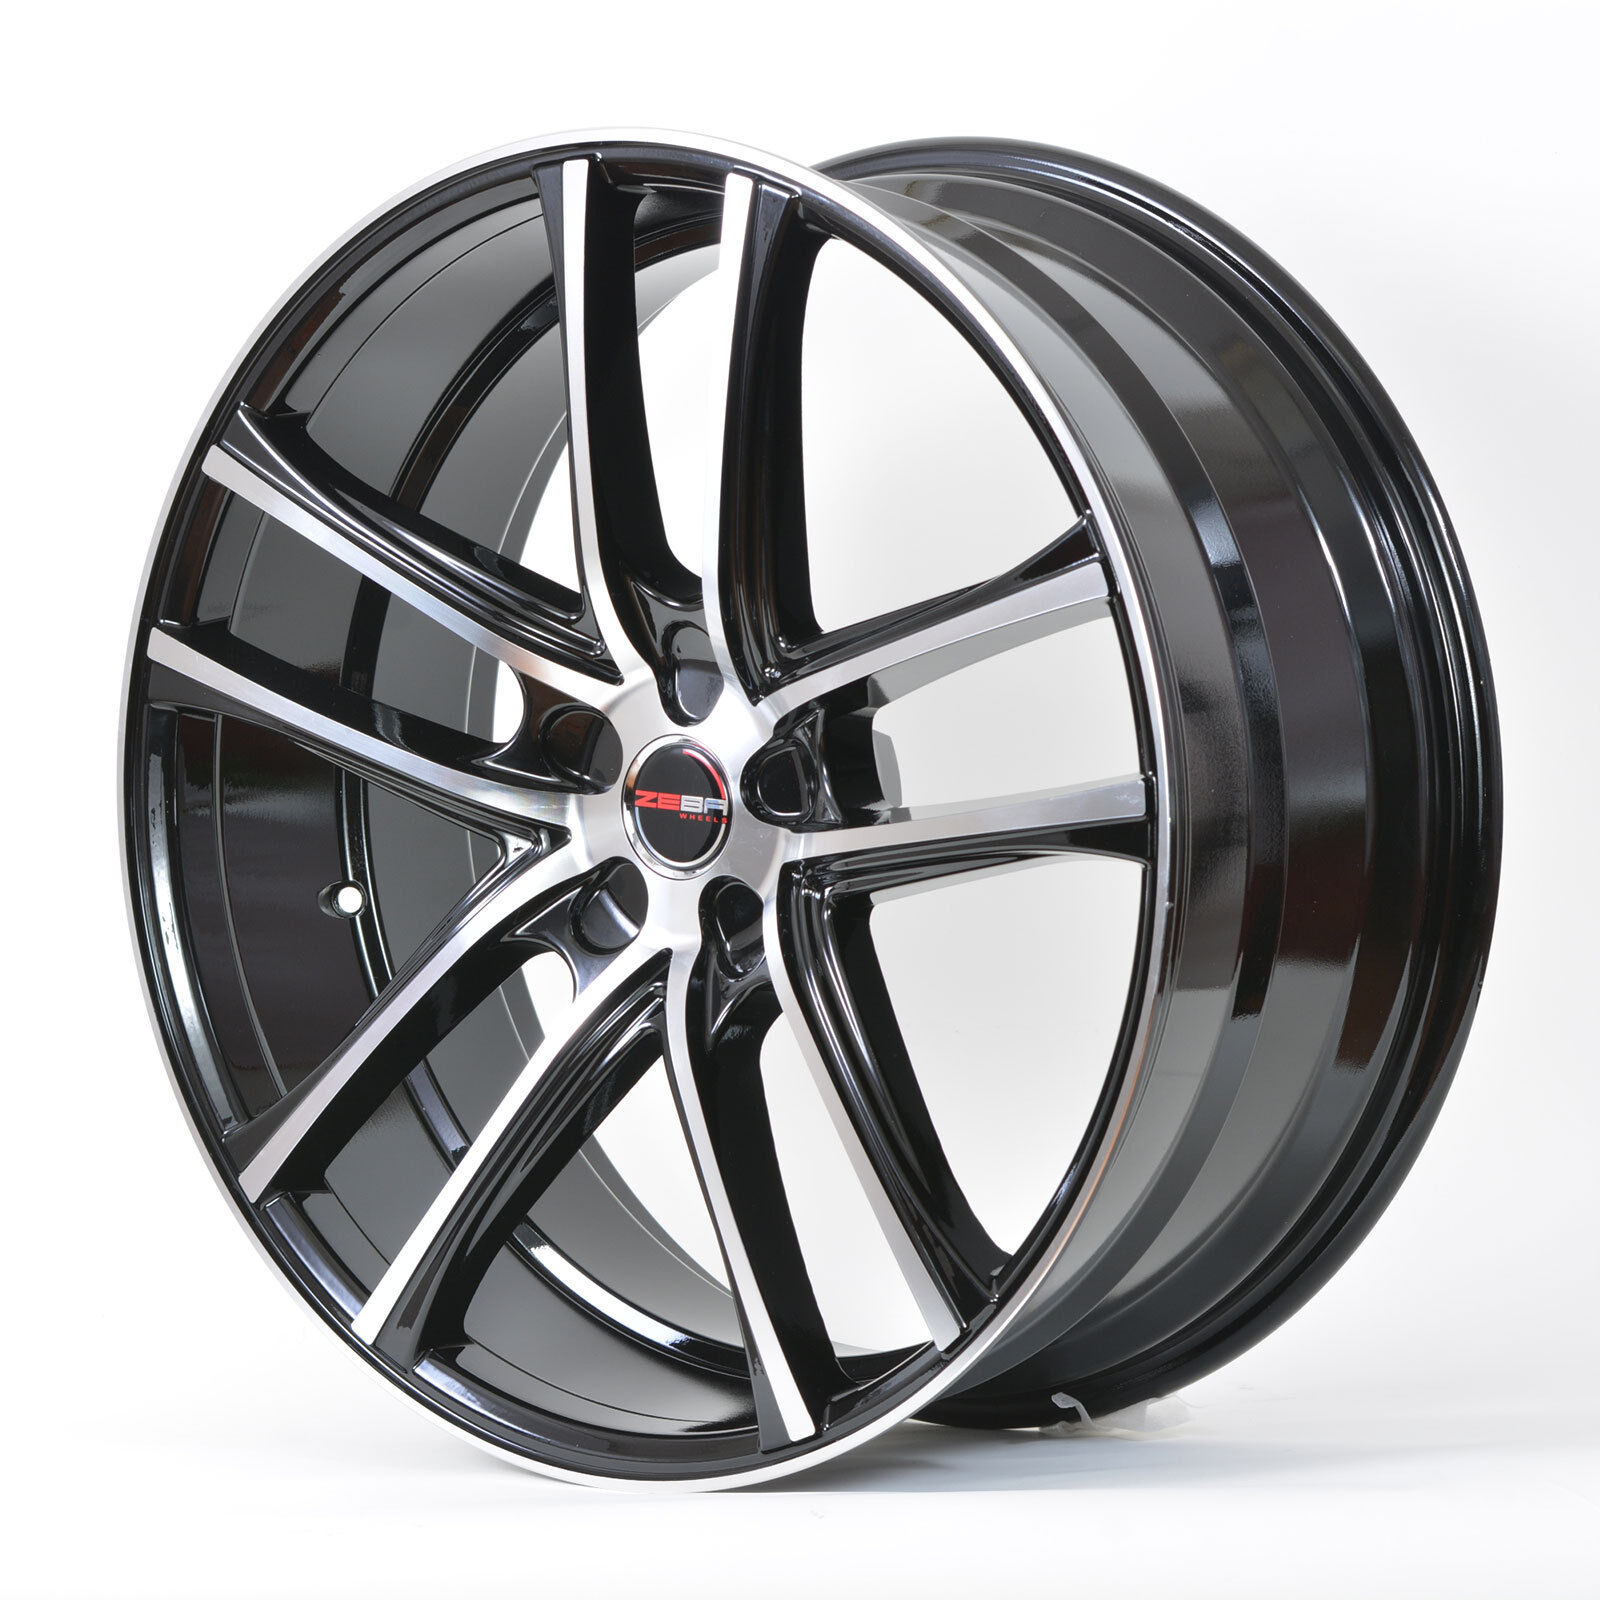 4 GWG Wheels 20 inch Black Machined ZERO Rims fits 5x114.3 ET35 INFINITI M35X